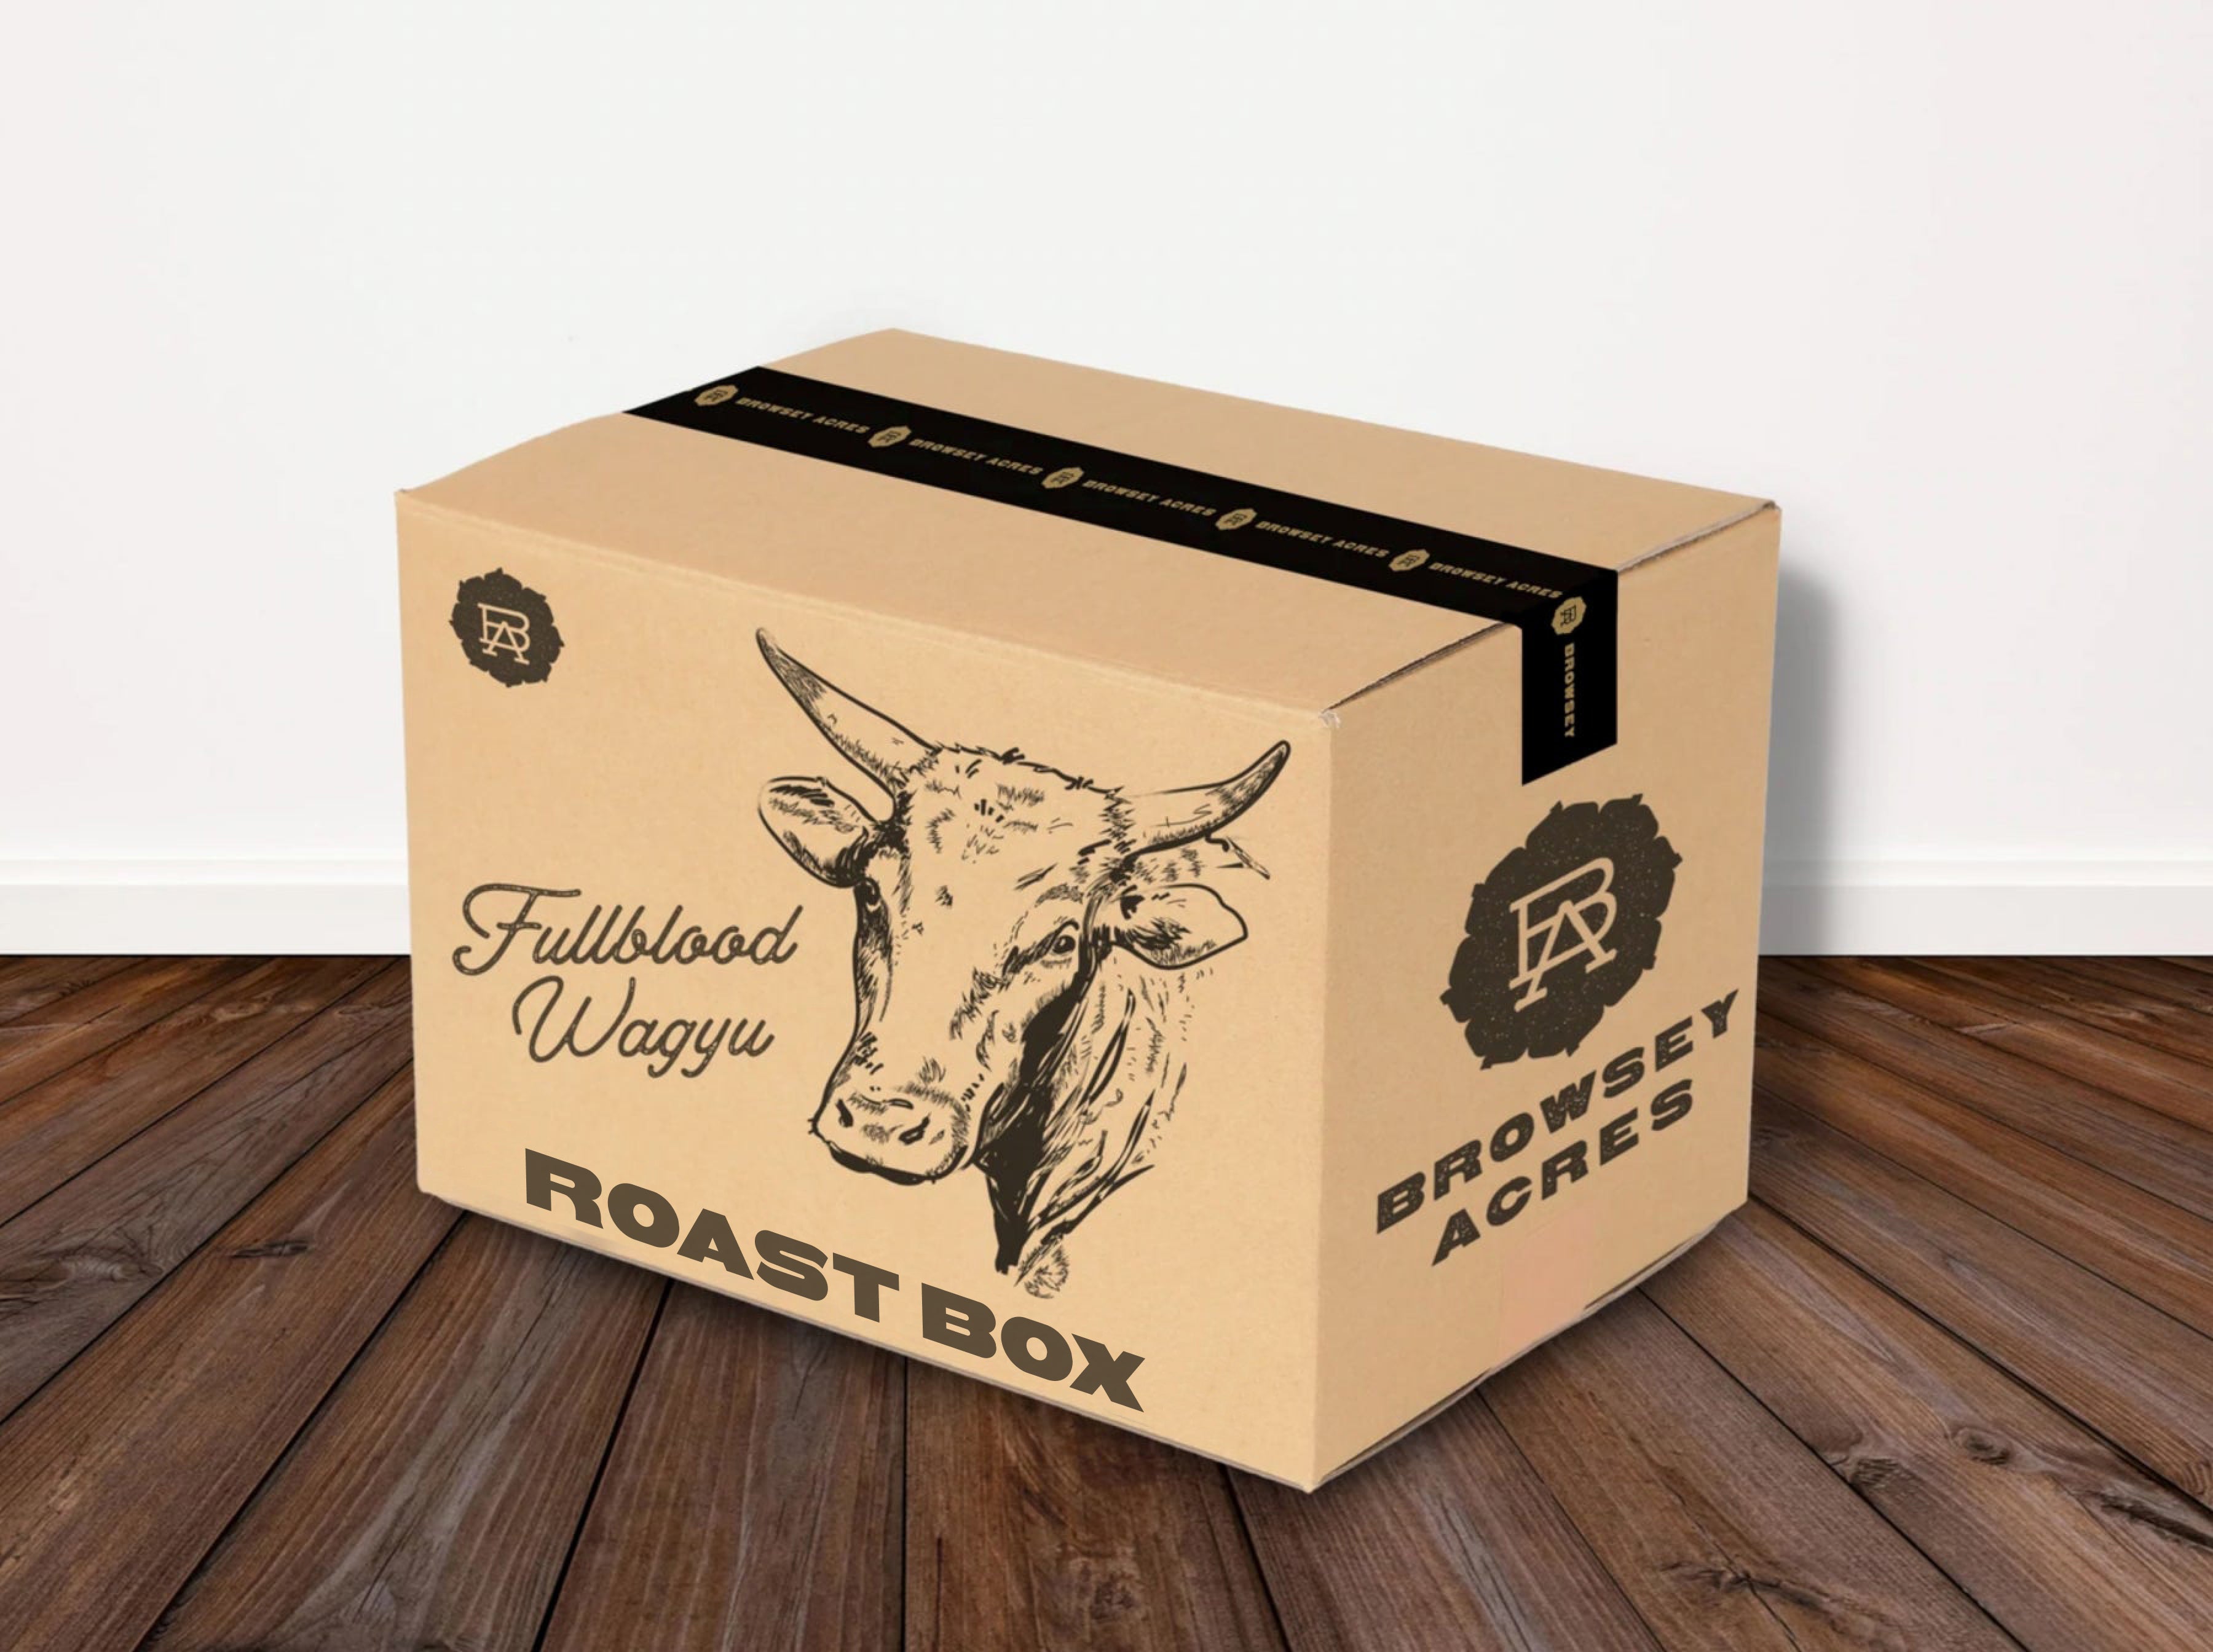 A cardboard box with 'Fullblood Wagyu Roast Box' branding on a wooden floor.